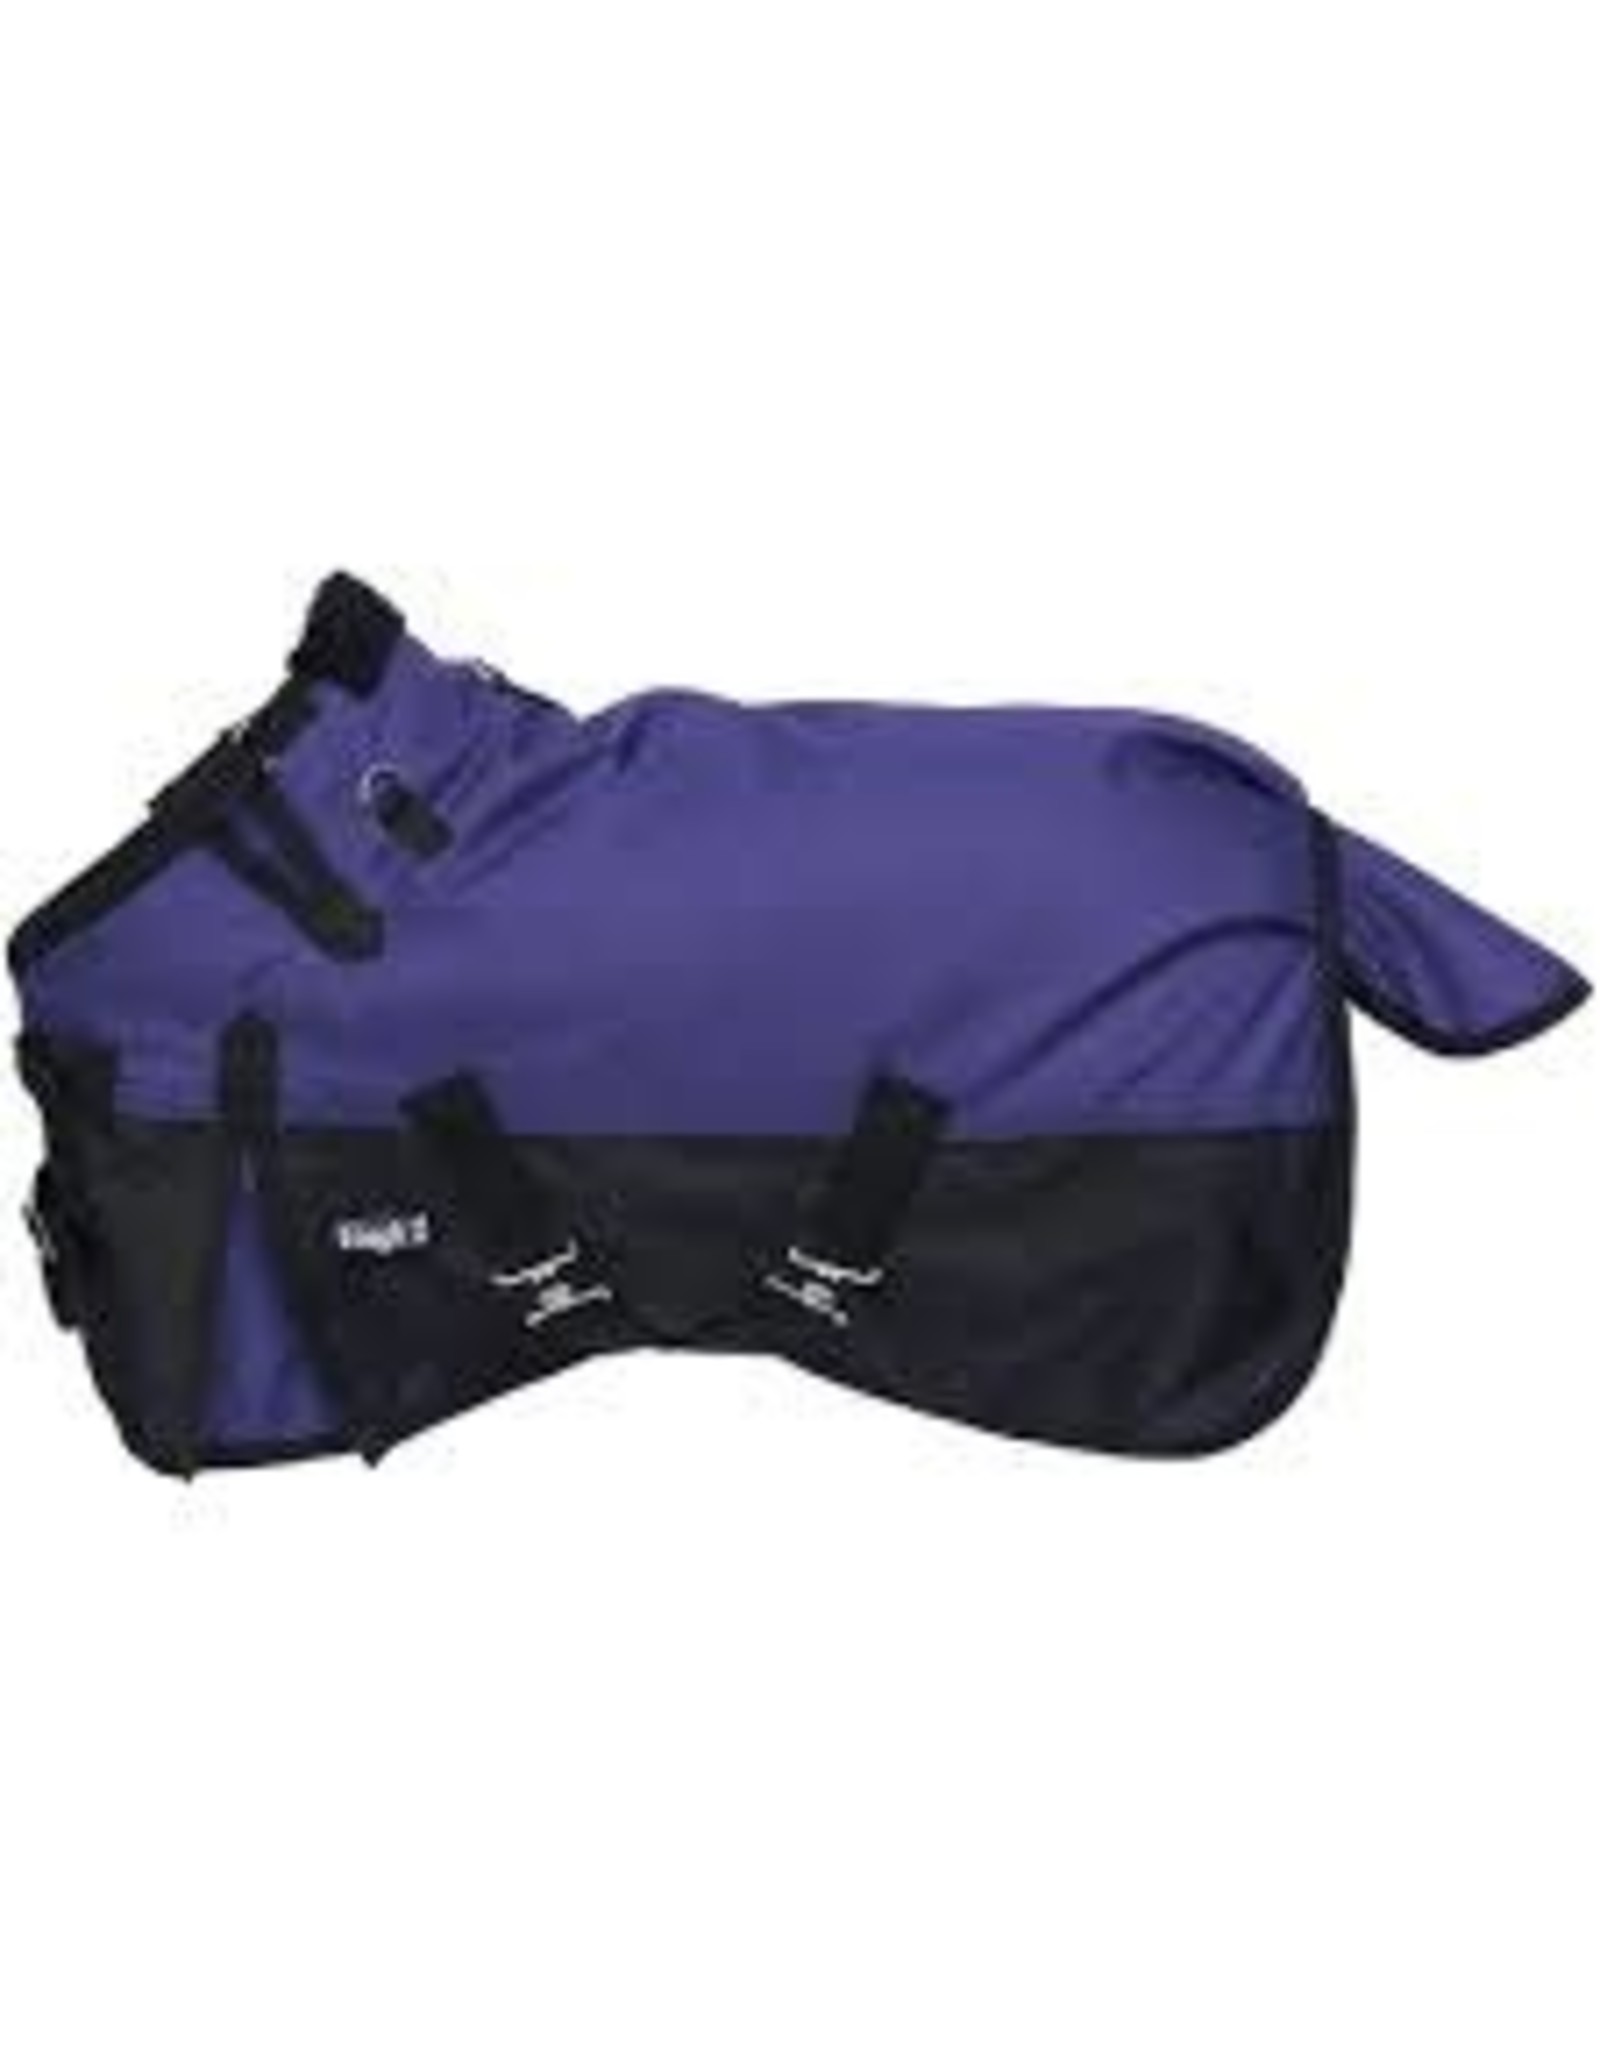 SHEET* Tough 1 - 1200D Waterproof Miniature Blanket 250g Poly Fill  - 40- Purple - 32-1250MNS-10-40